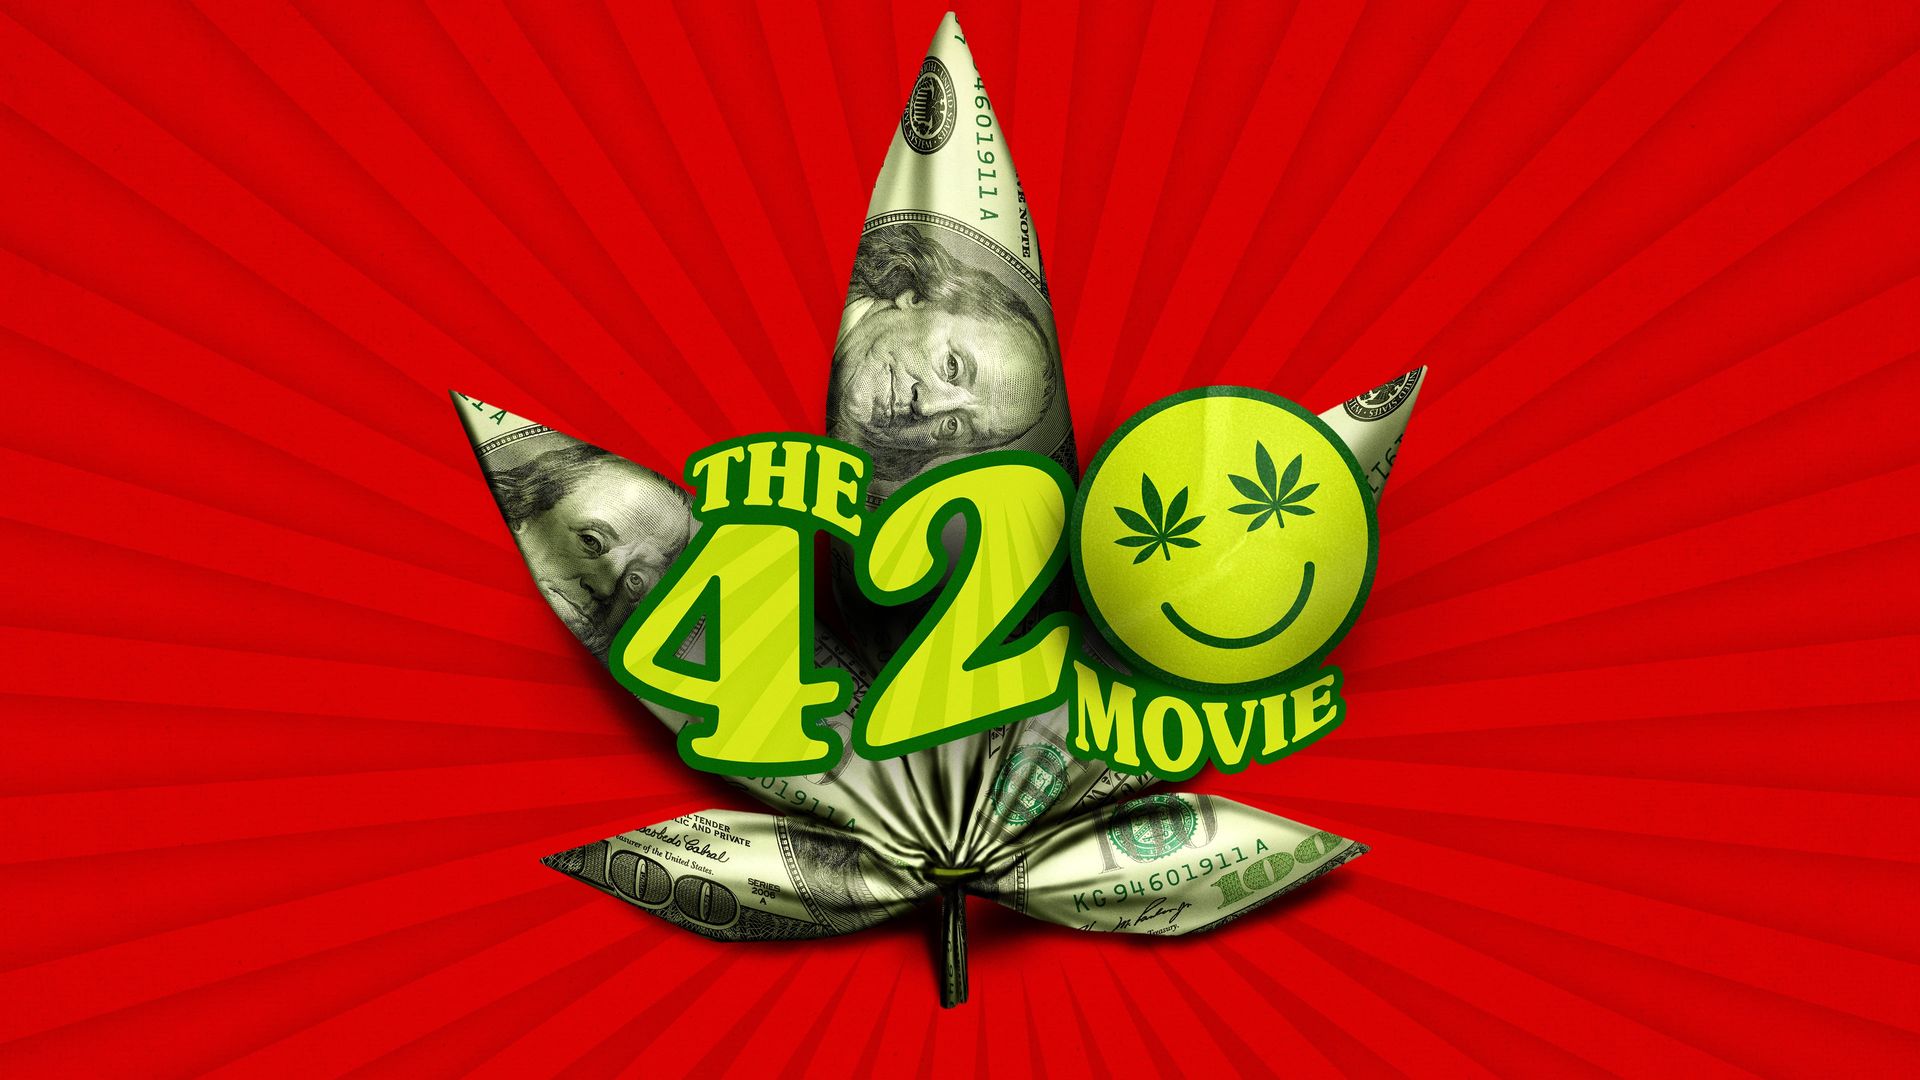 The 420 Movie: Mary & Jane background